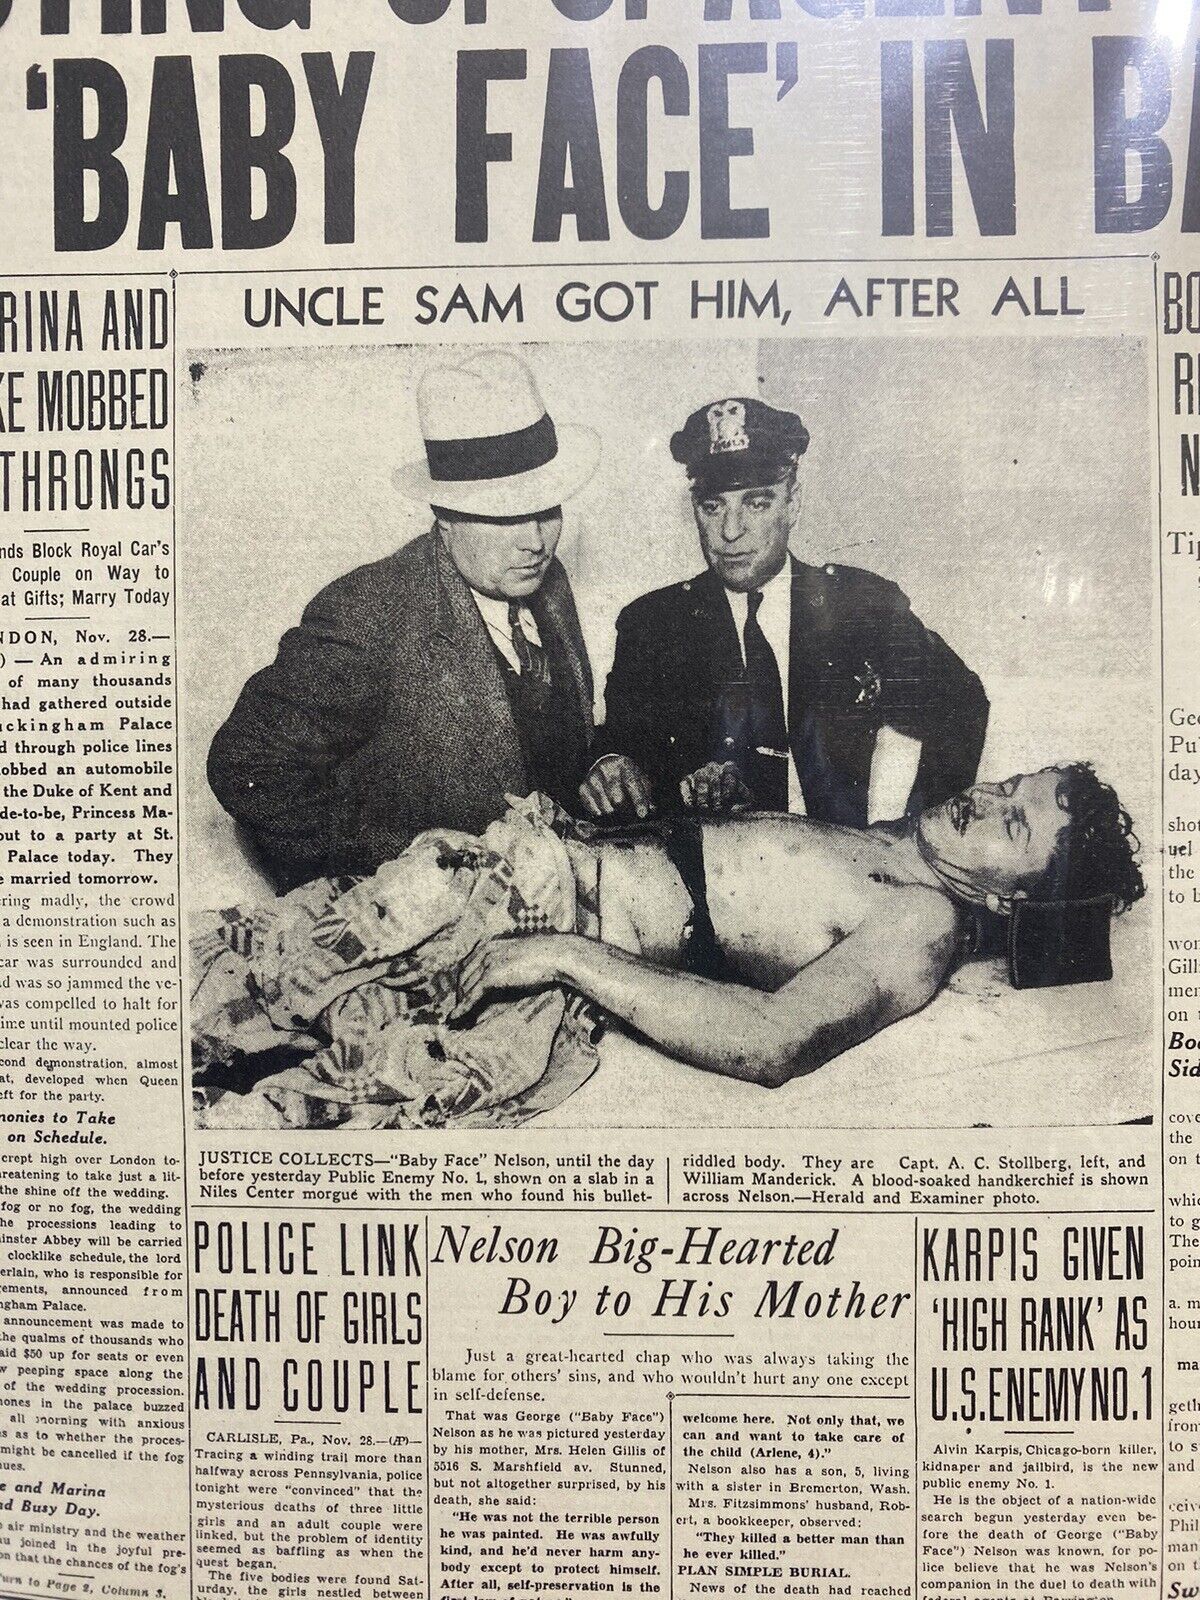 VINTAGE NEWSPAPER HEADLINE ~ CHICAGO GANGSTER BABY FACE NELSON SHOT KILLED  1934